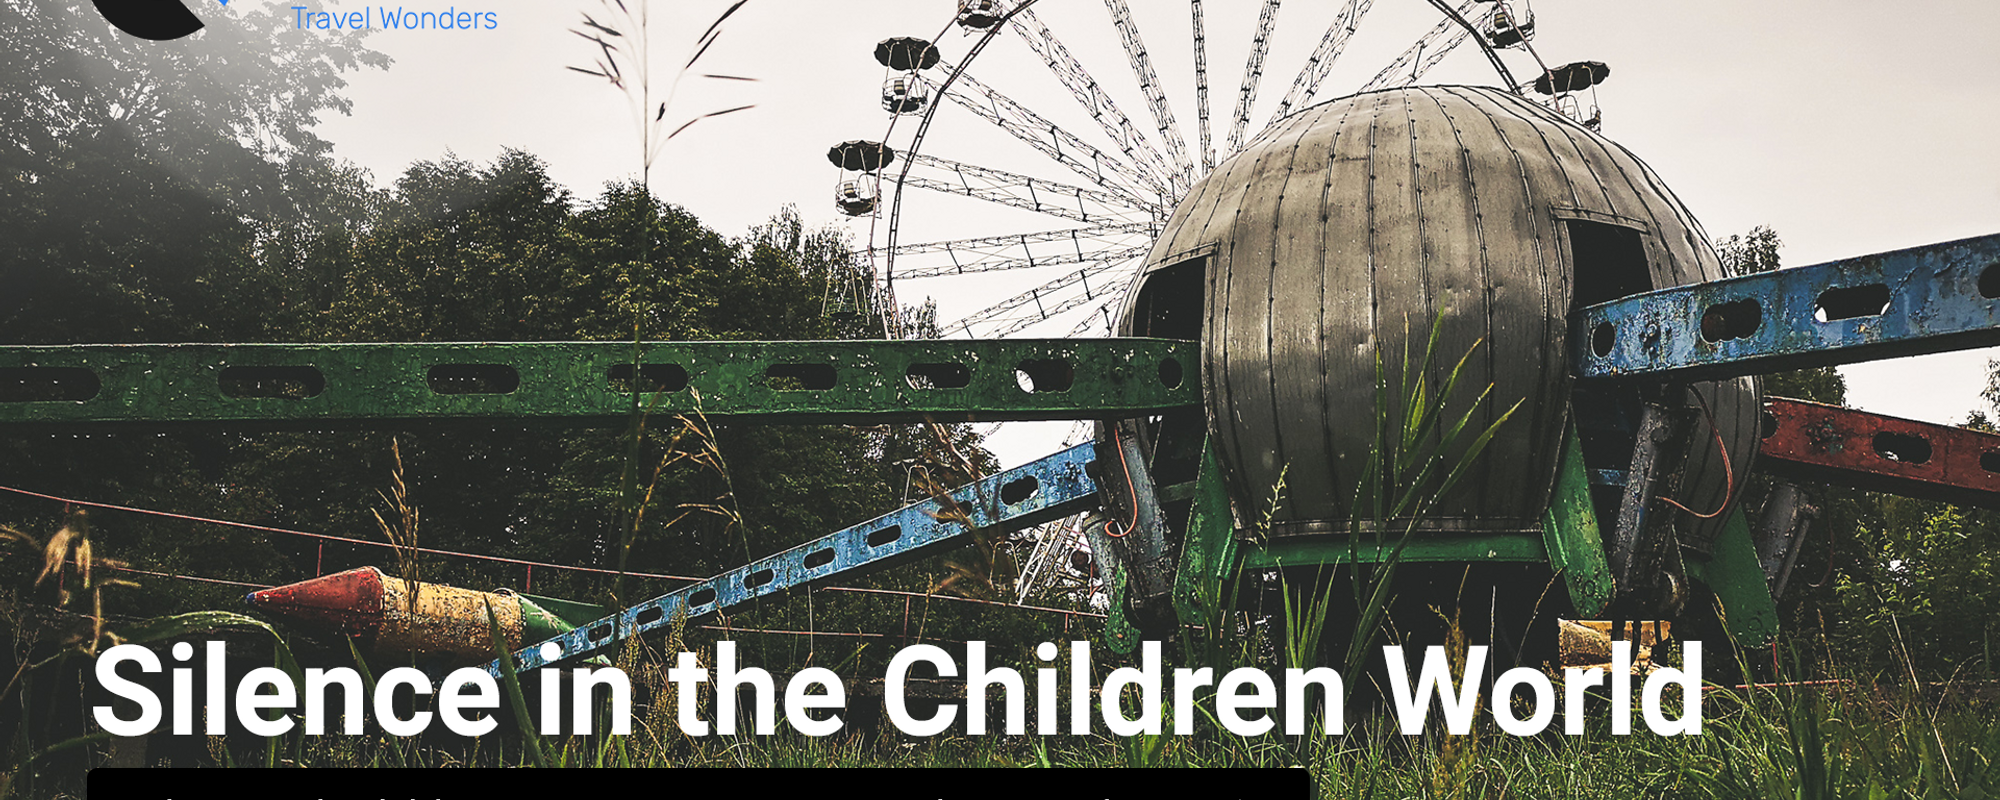 Chernobyl-like Amusement Park of the Soviet Era in Lithuania